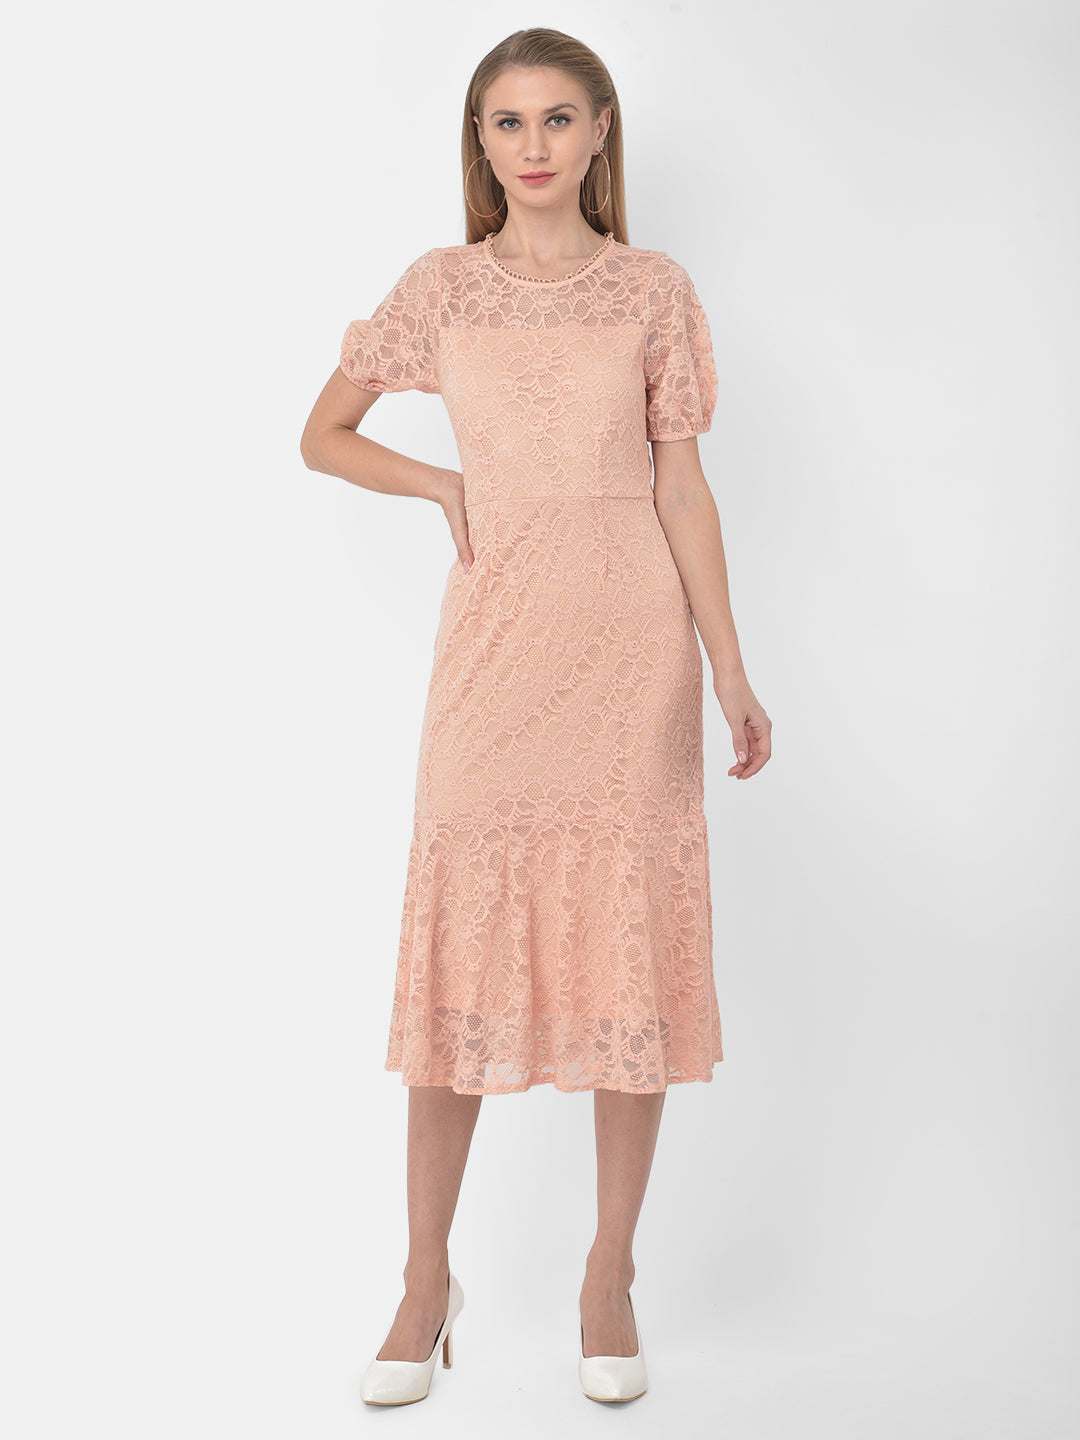 Peach Half Sleeve A-Line Dress With Lace